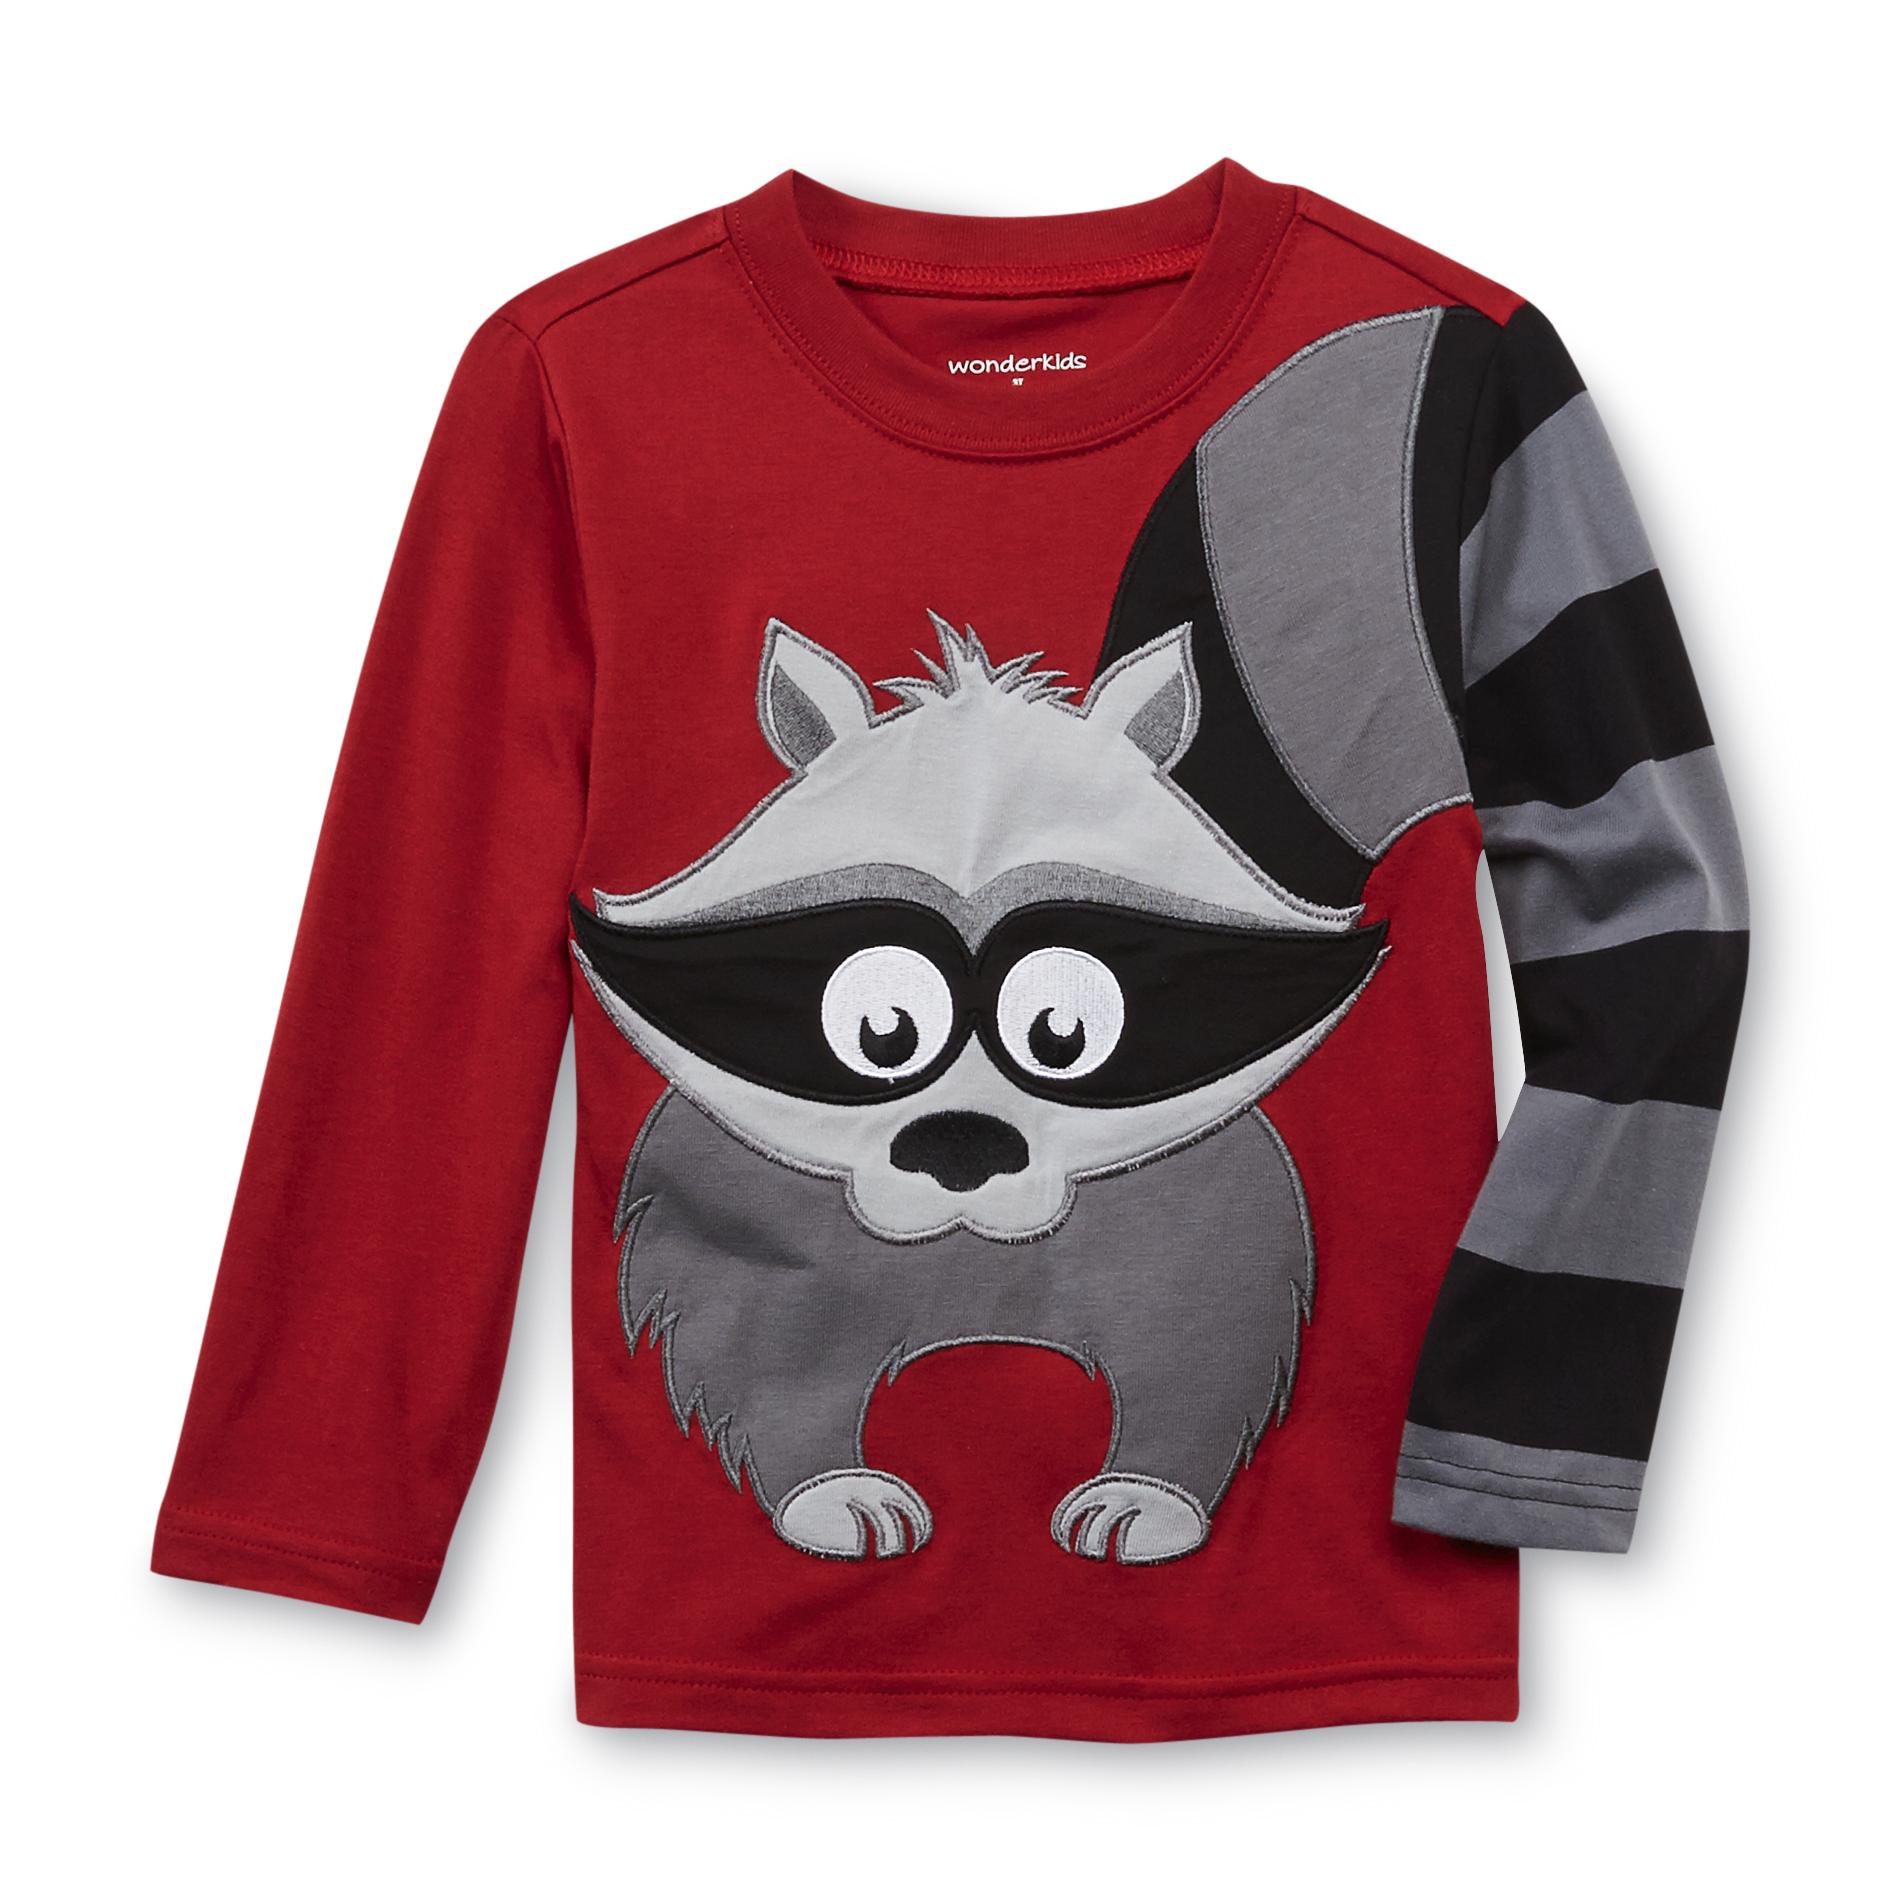 WonderKids Infant & Toddler Boy's Long-Sleeve Applique T-Shirt - Raccoon